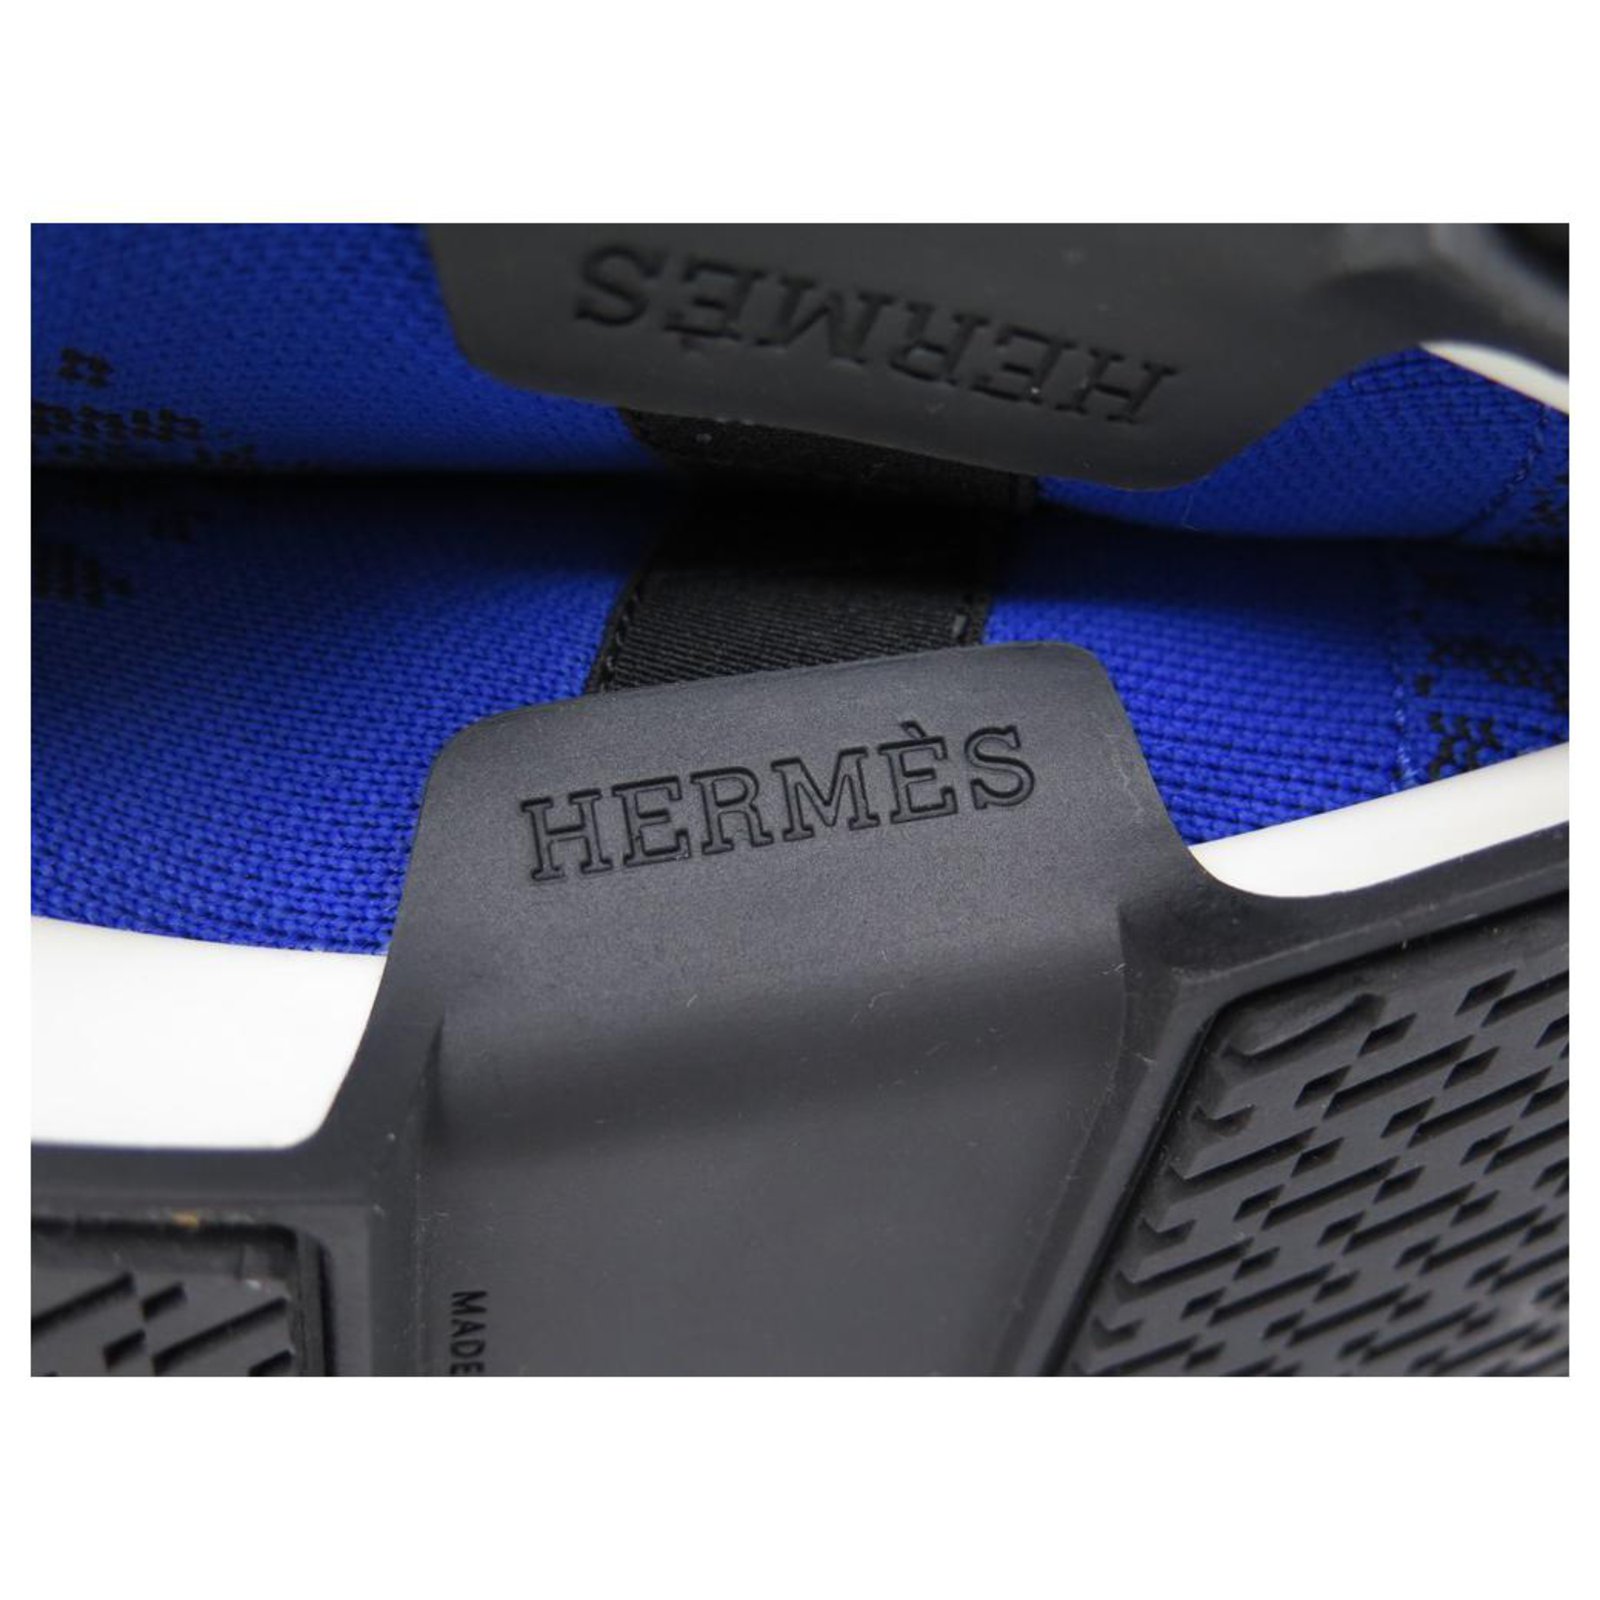 Hermès NEW HERMES BASKETS RUN SHOES 181333zh20420 41 CANVAS 